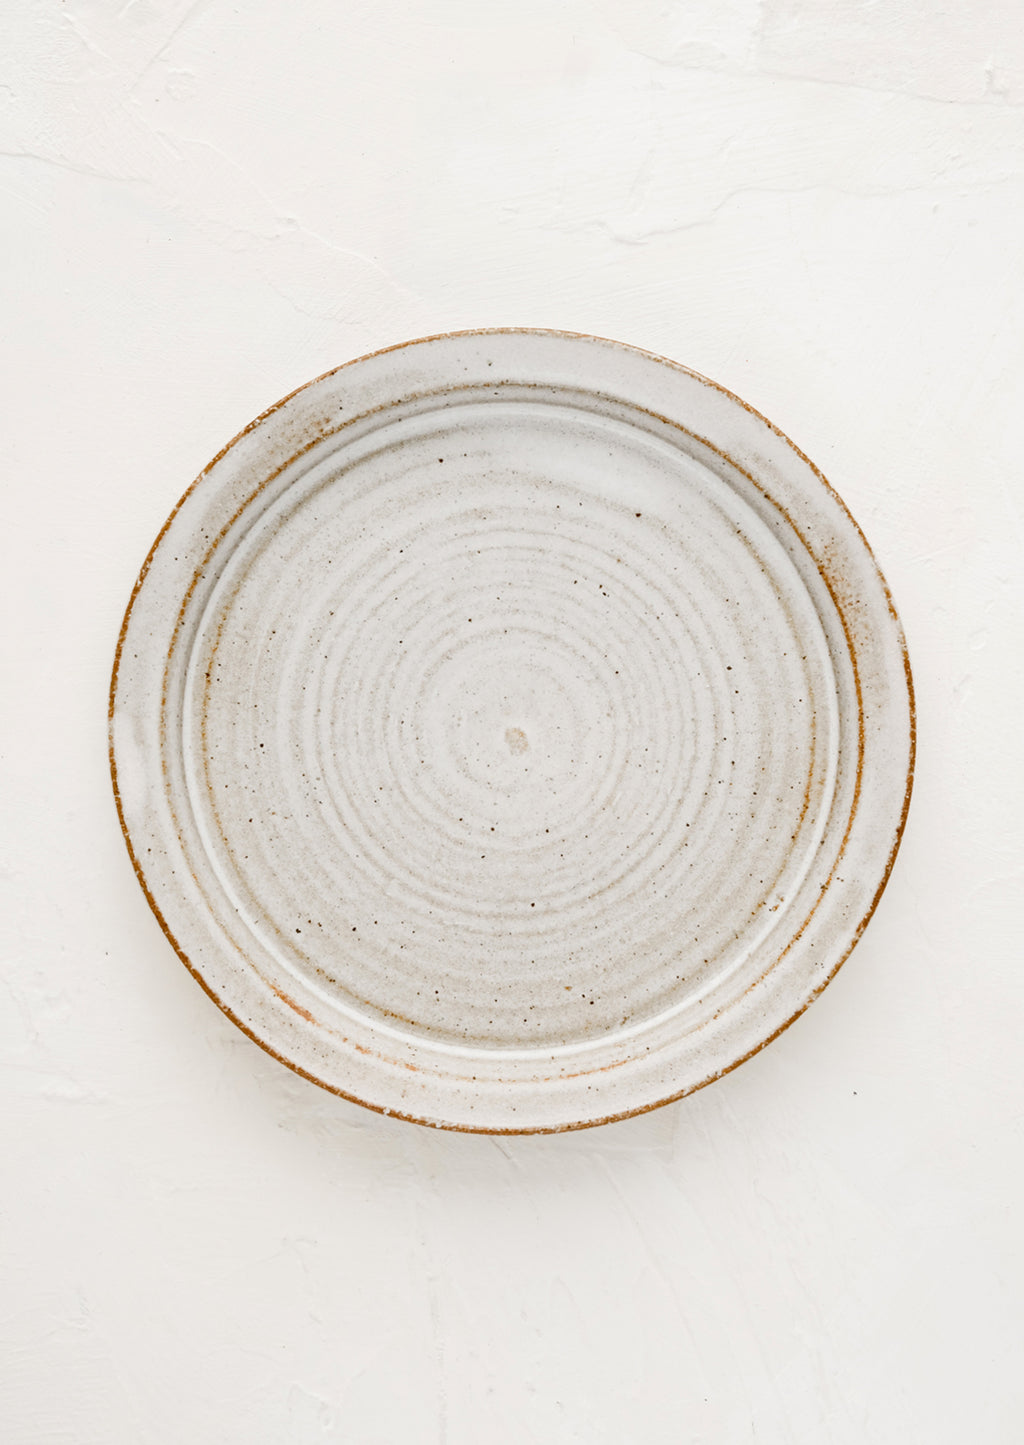 Natural Rustic (Glossy): A ceramic side plate in natural rustic glaze.